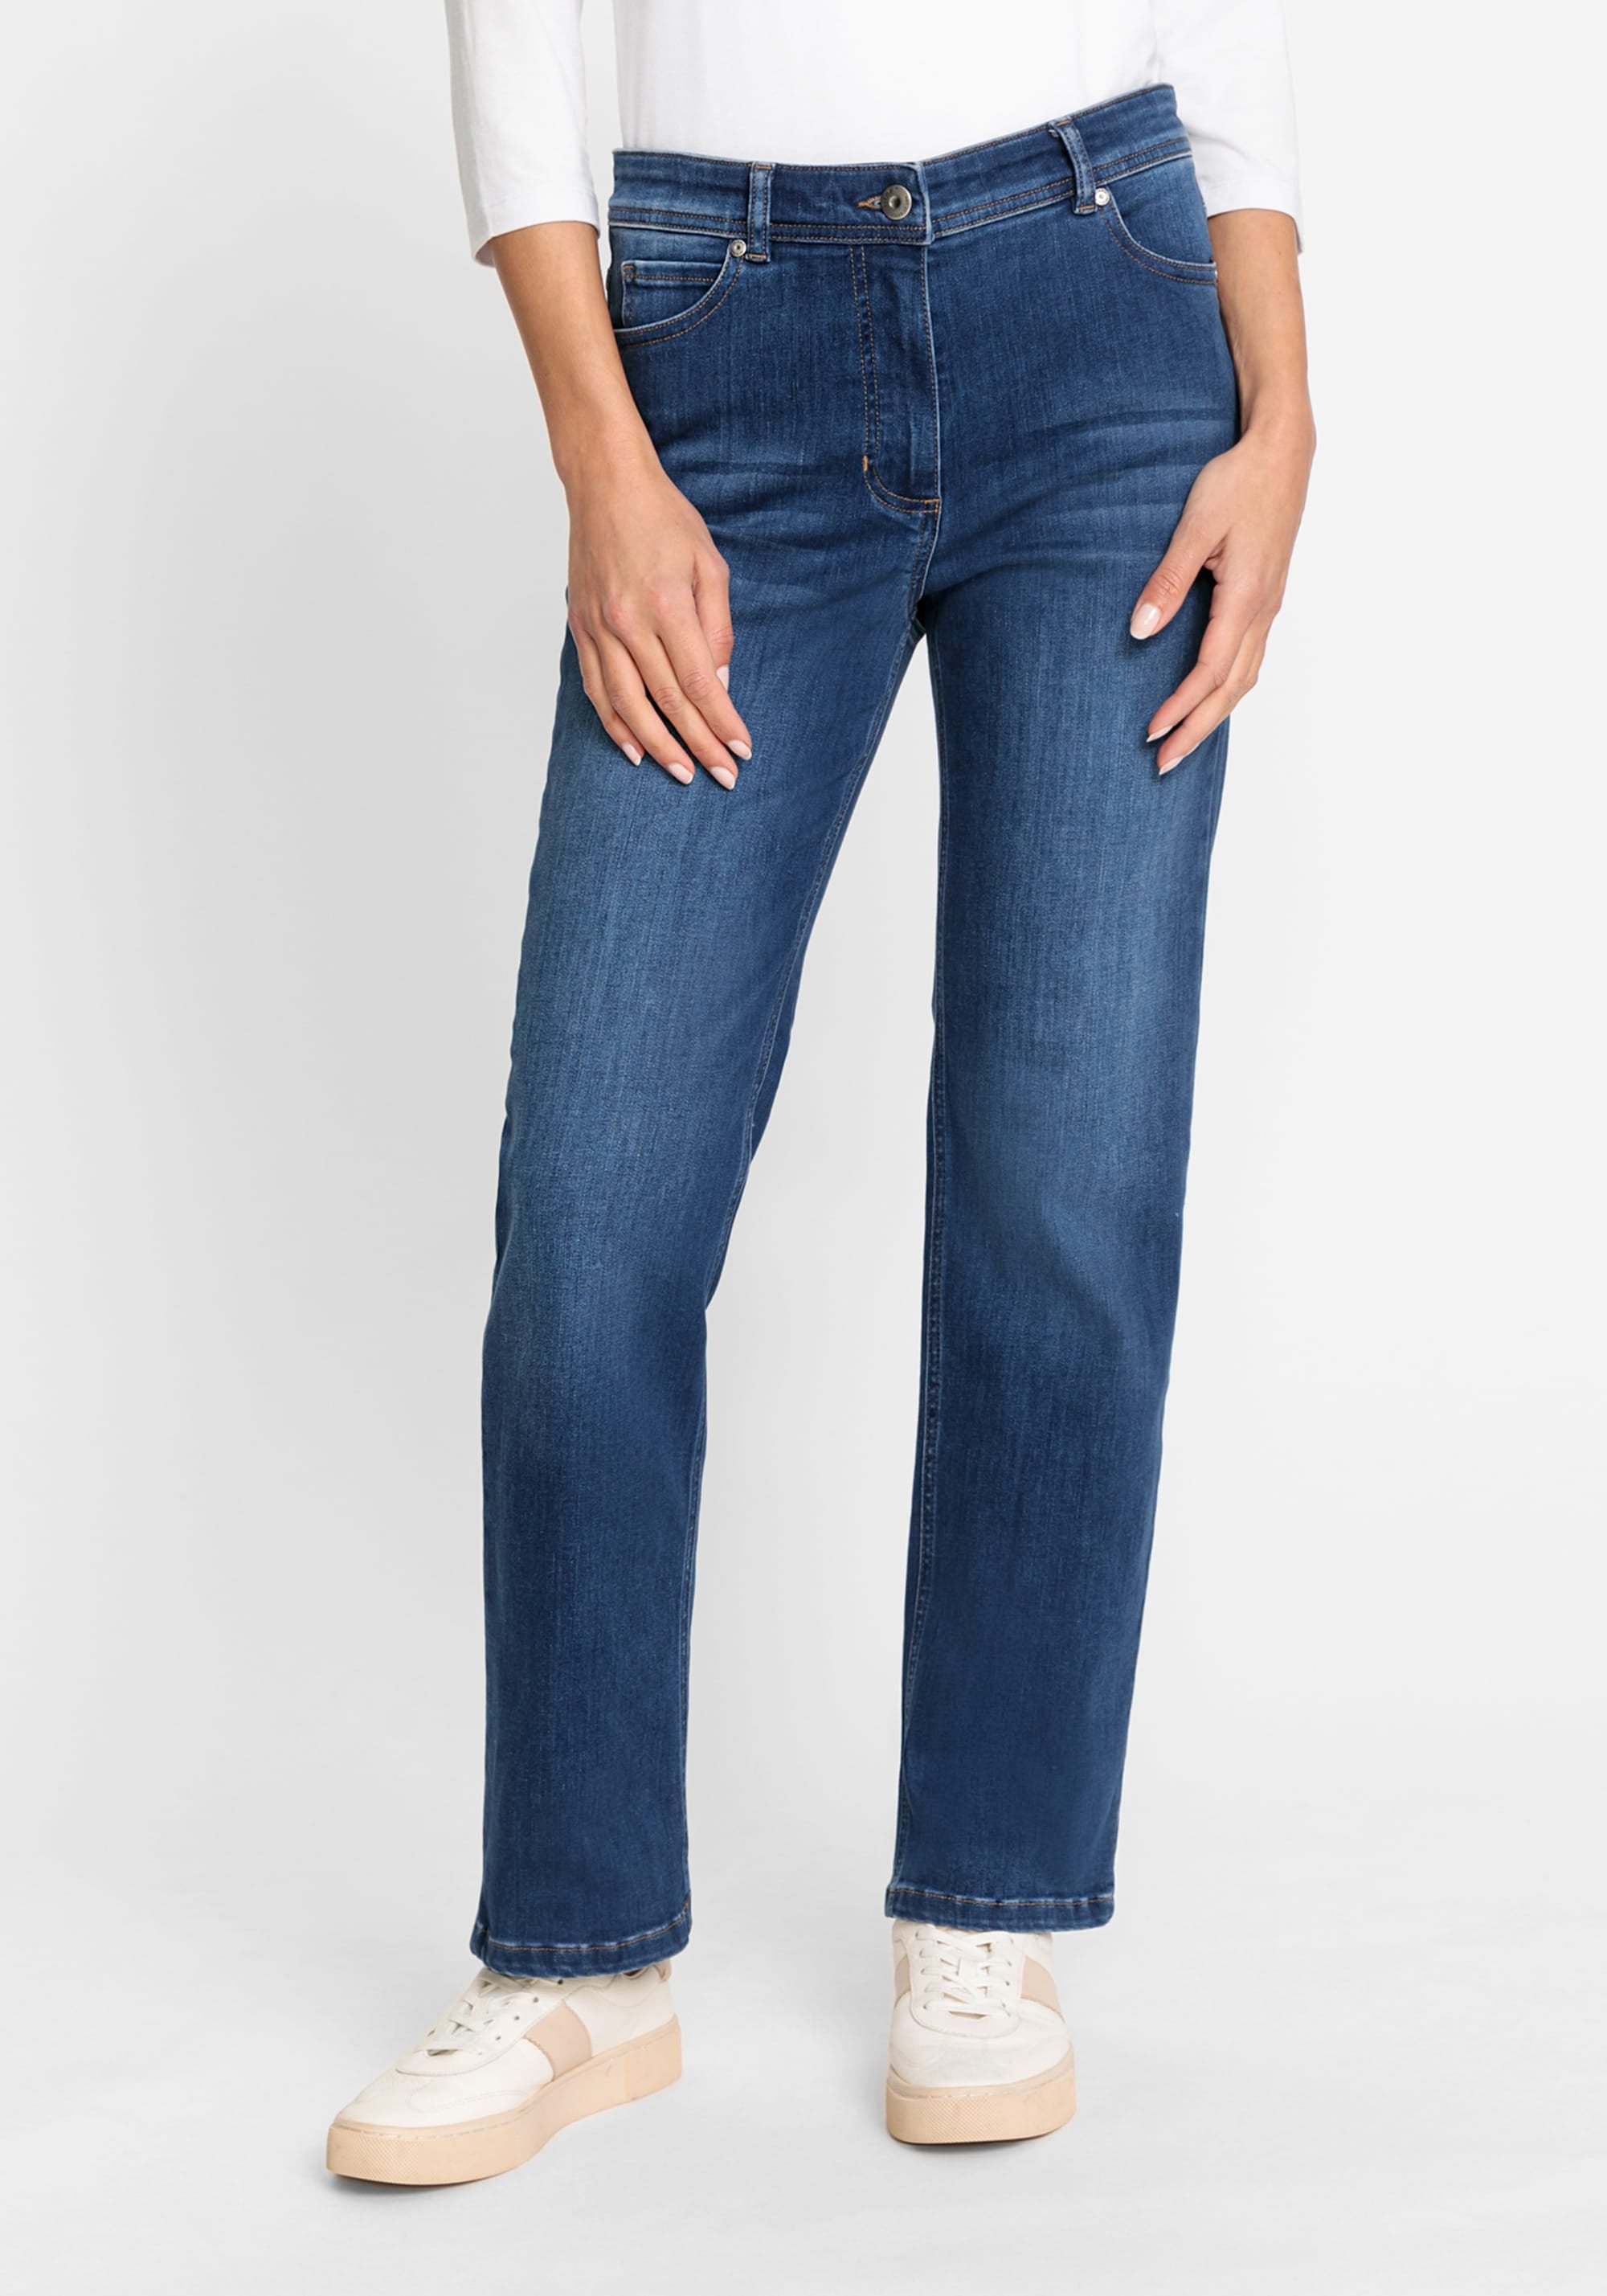 Mona Fit Straight Leg Jean containing REPREVE® - Olsen Fashion Canada